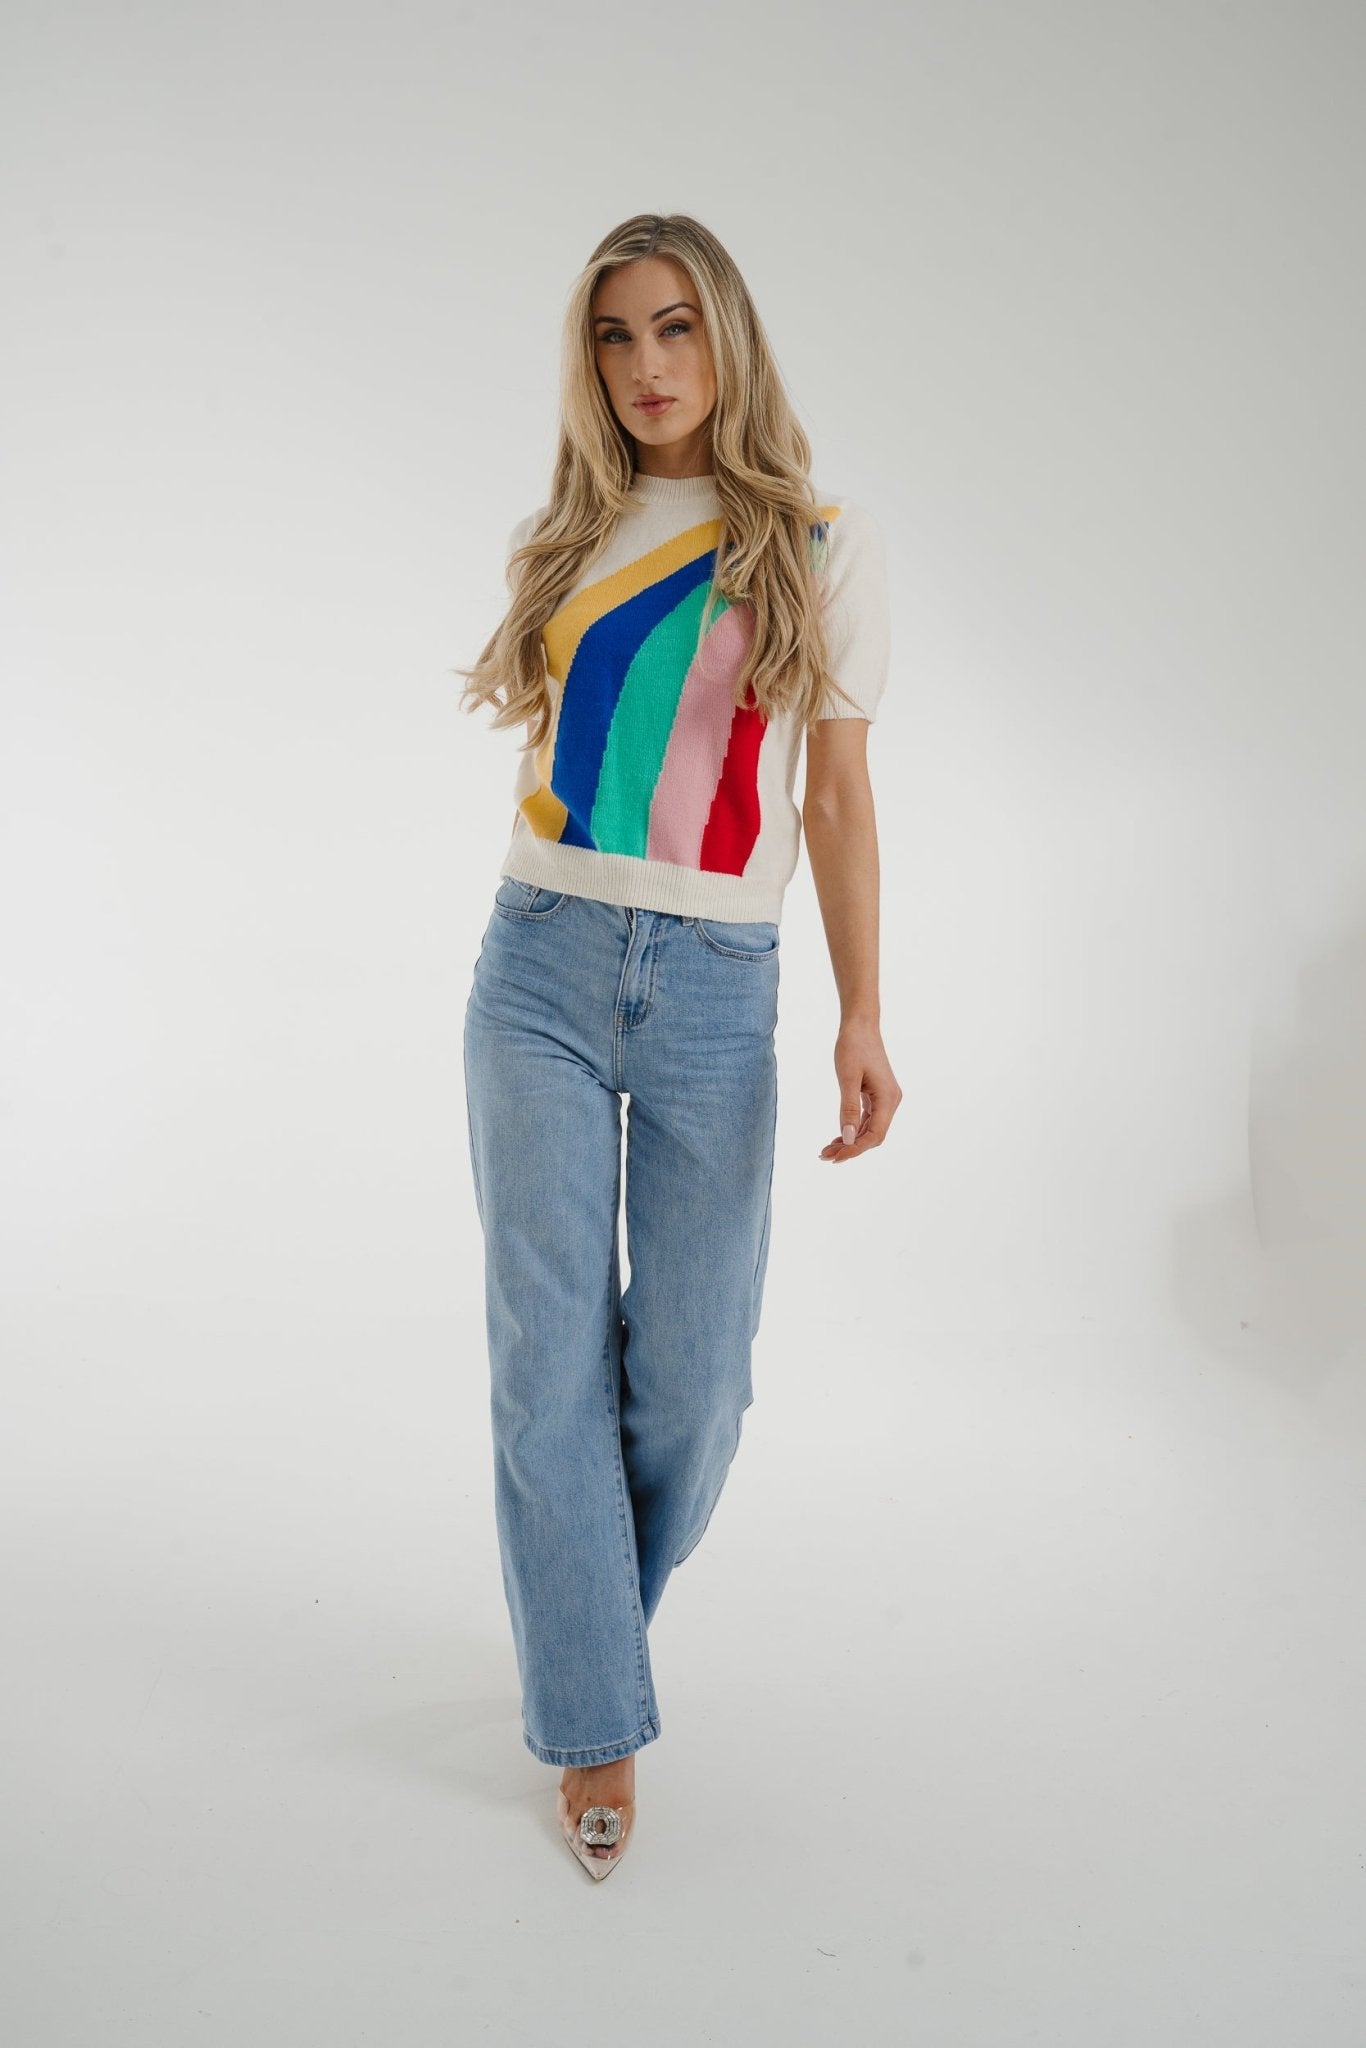 Melanie Rainbow Knit Jumper In Neutral - The Walk in Wardrobe